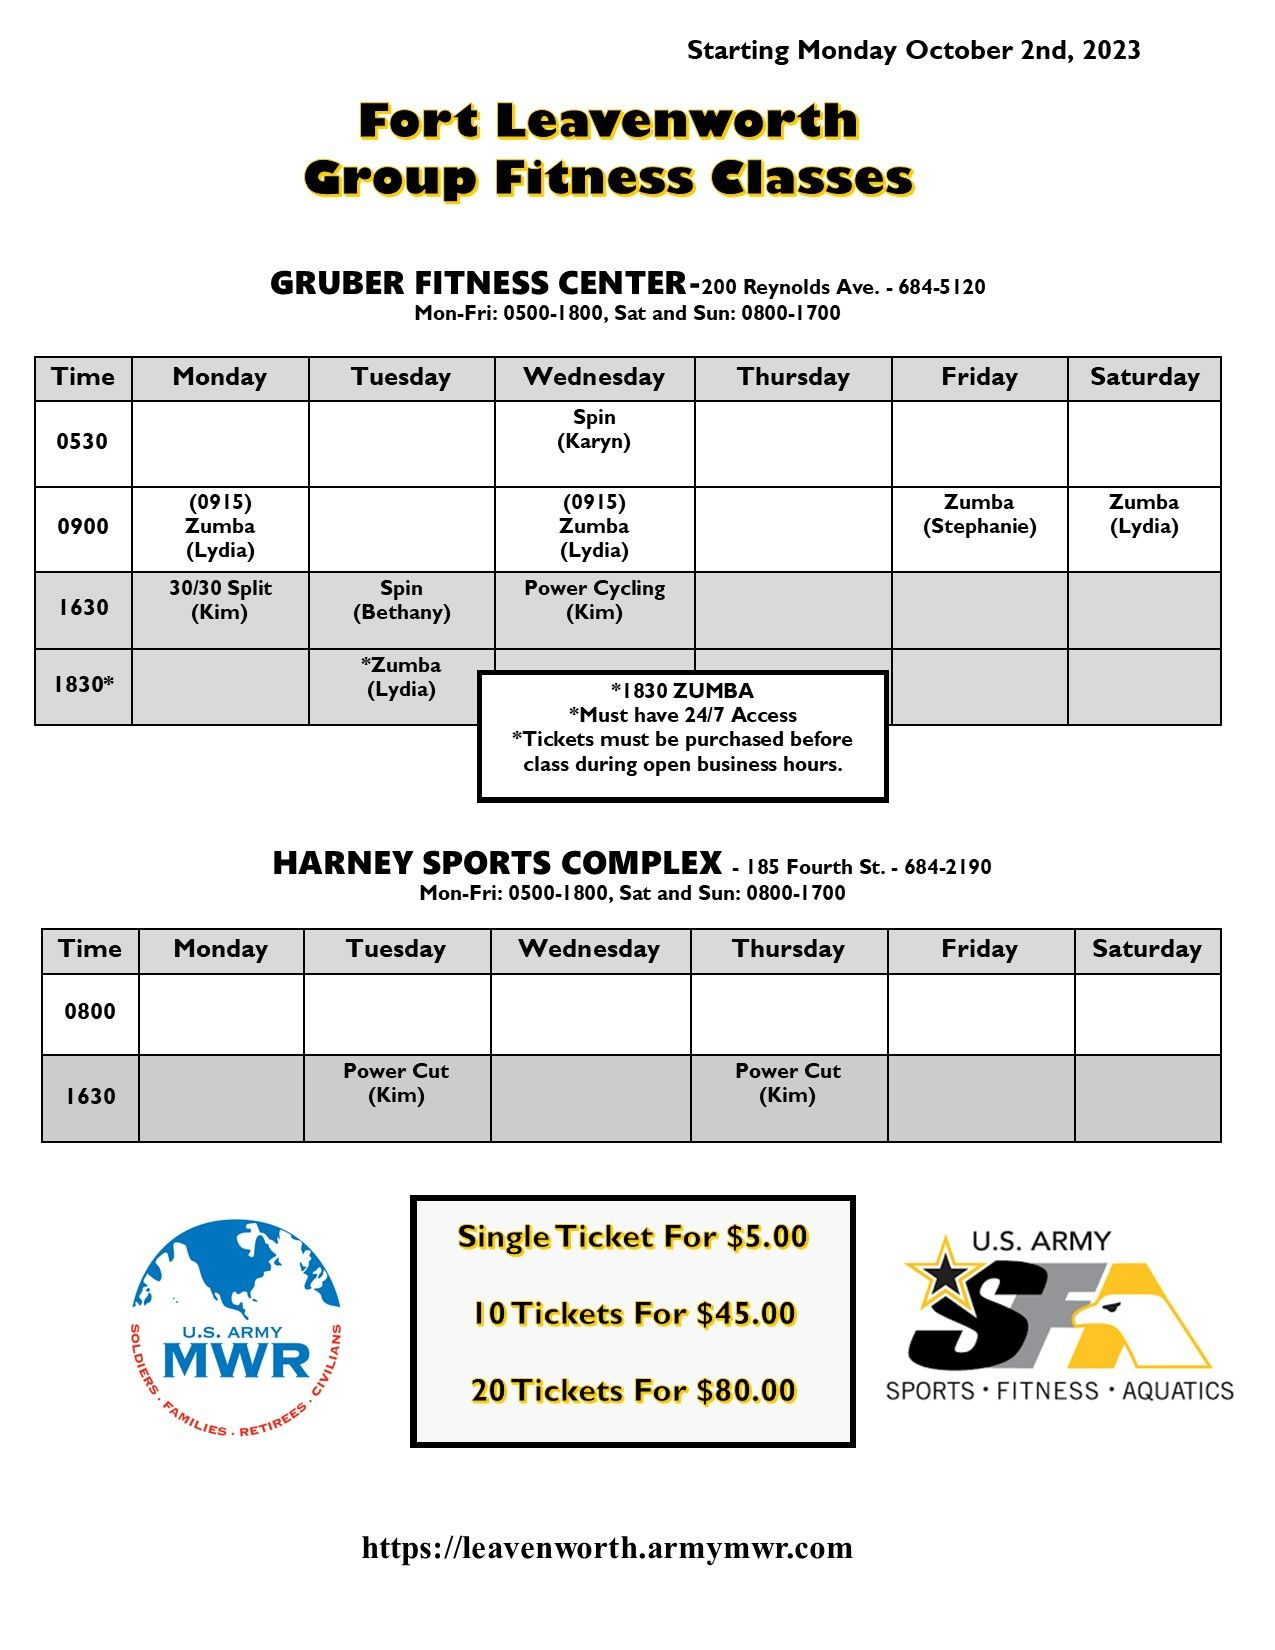 Group Fitness Schedule Oct 1 2023.jpg